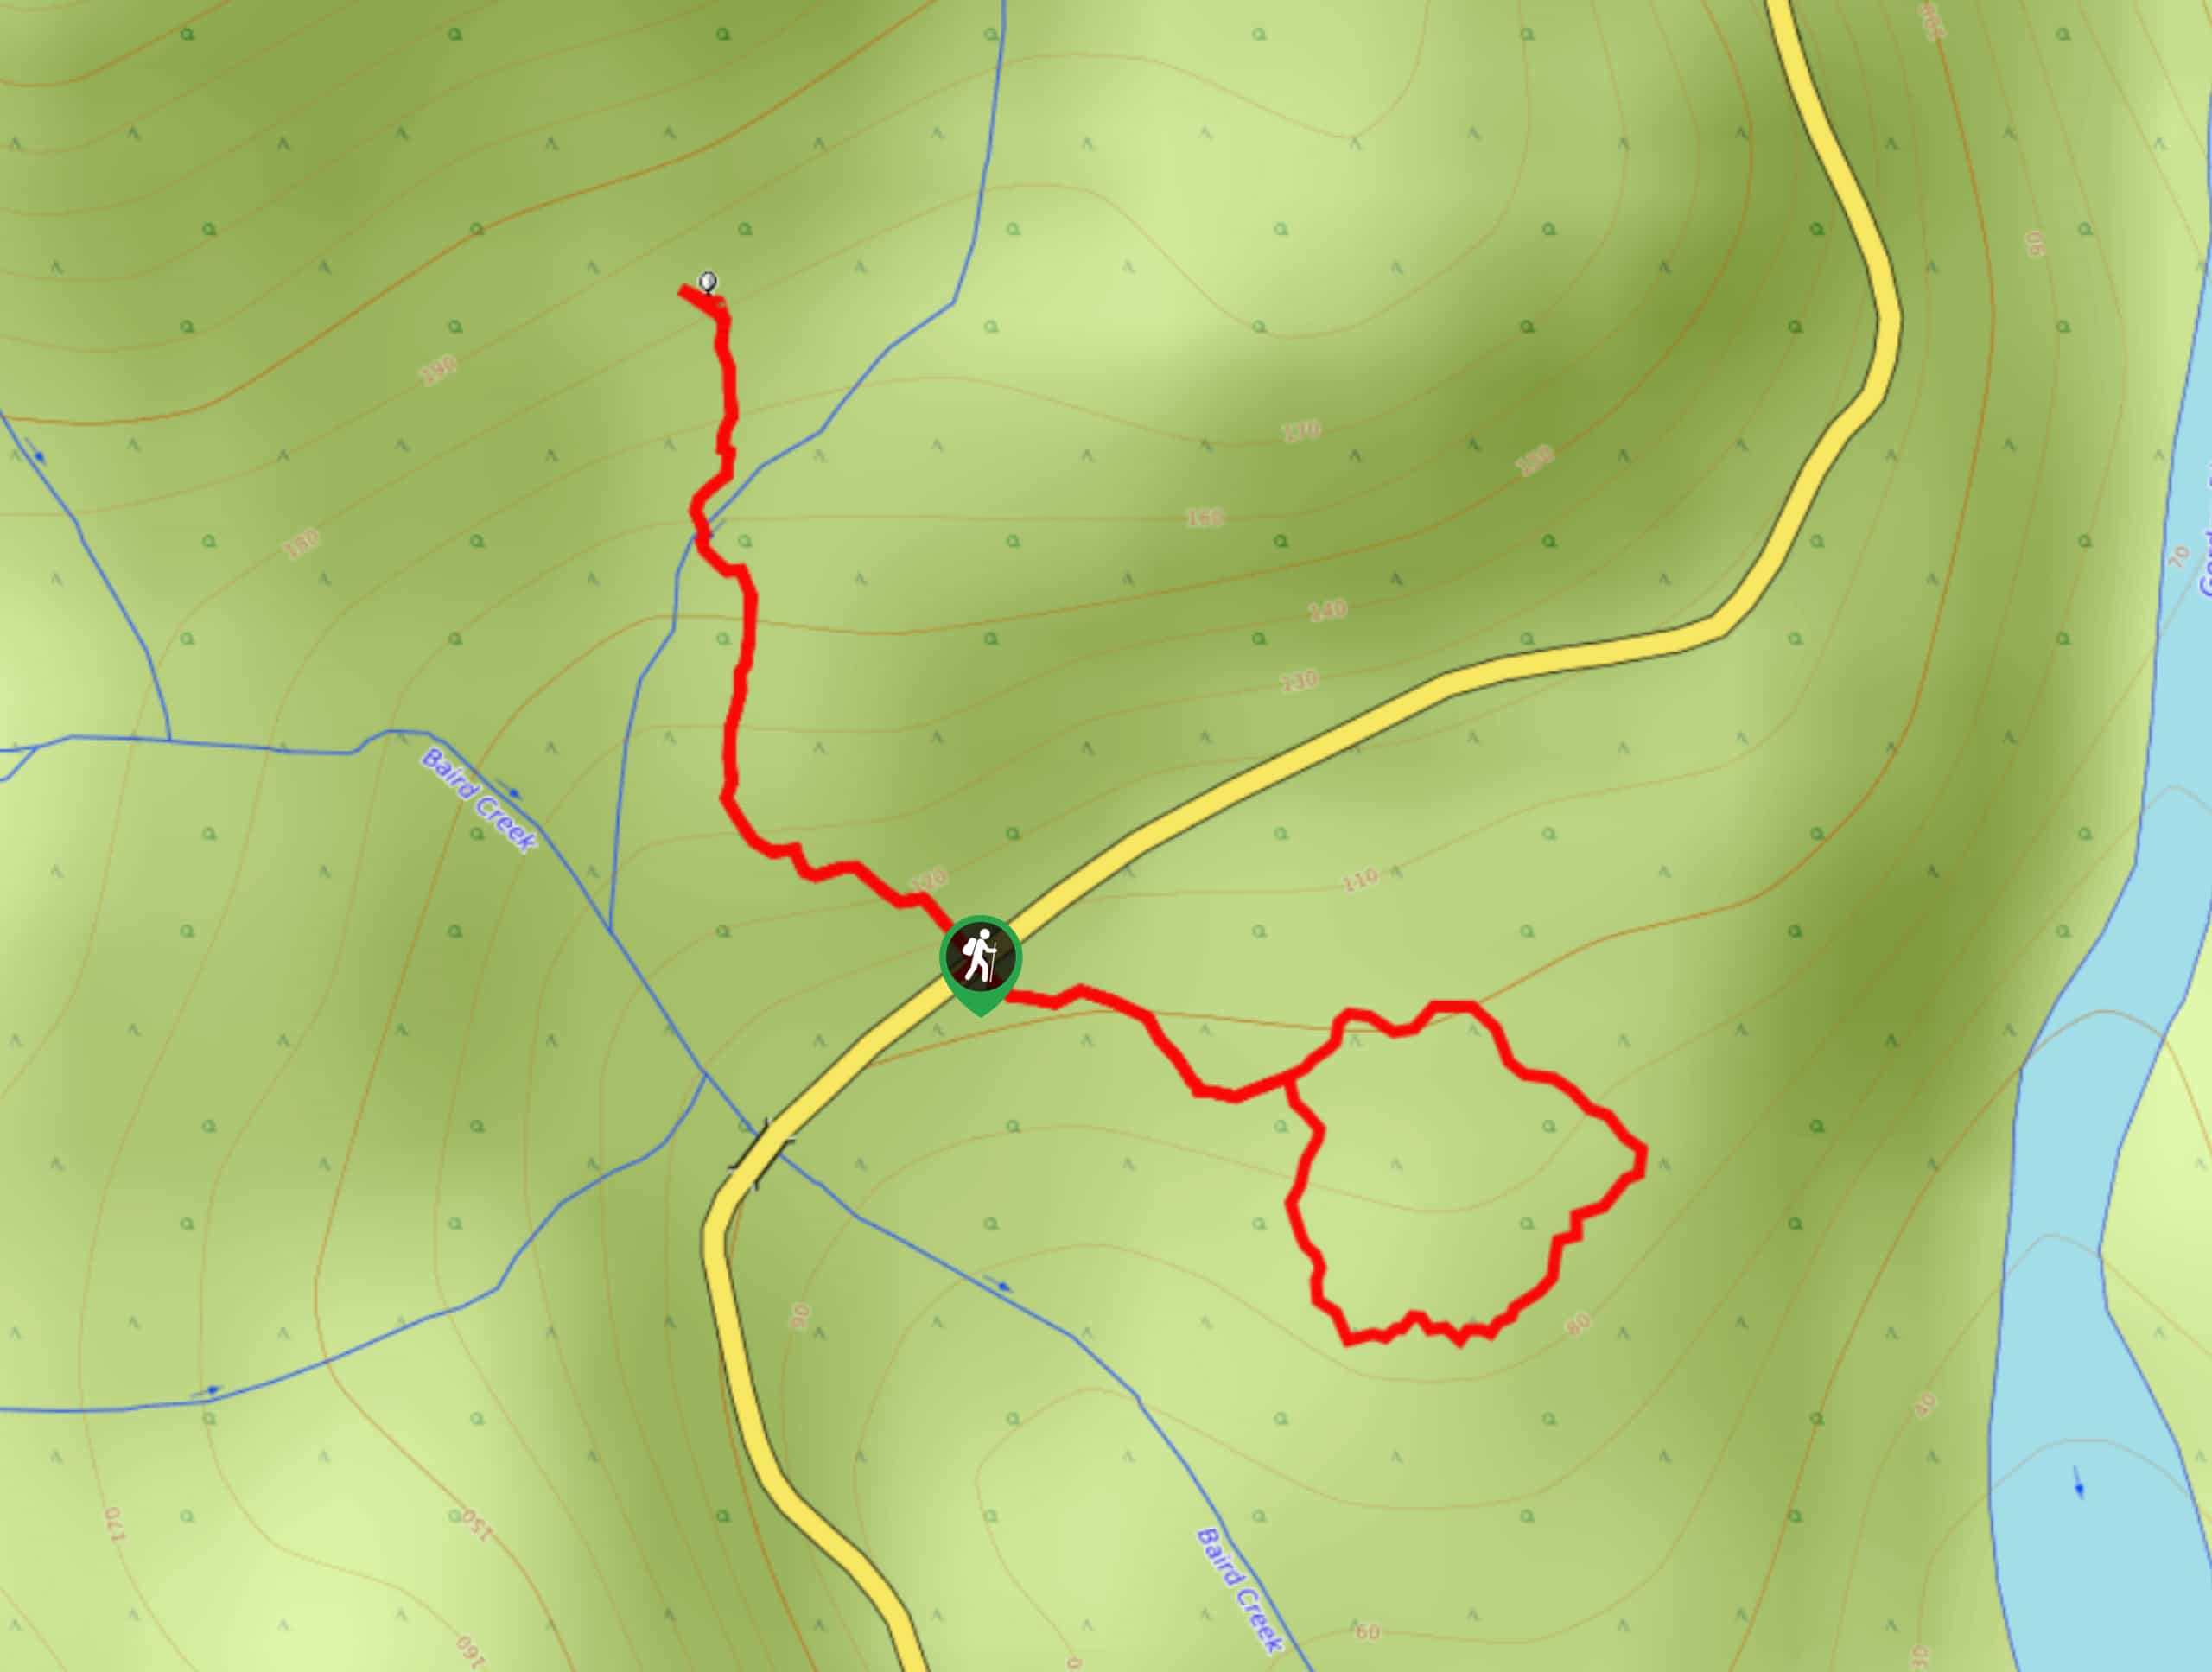 Avatar Grove Nature Trail Map